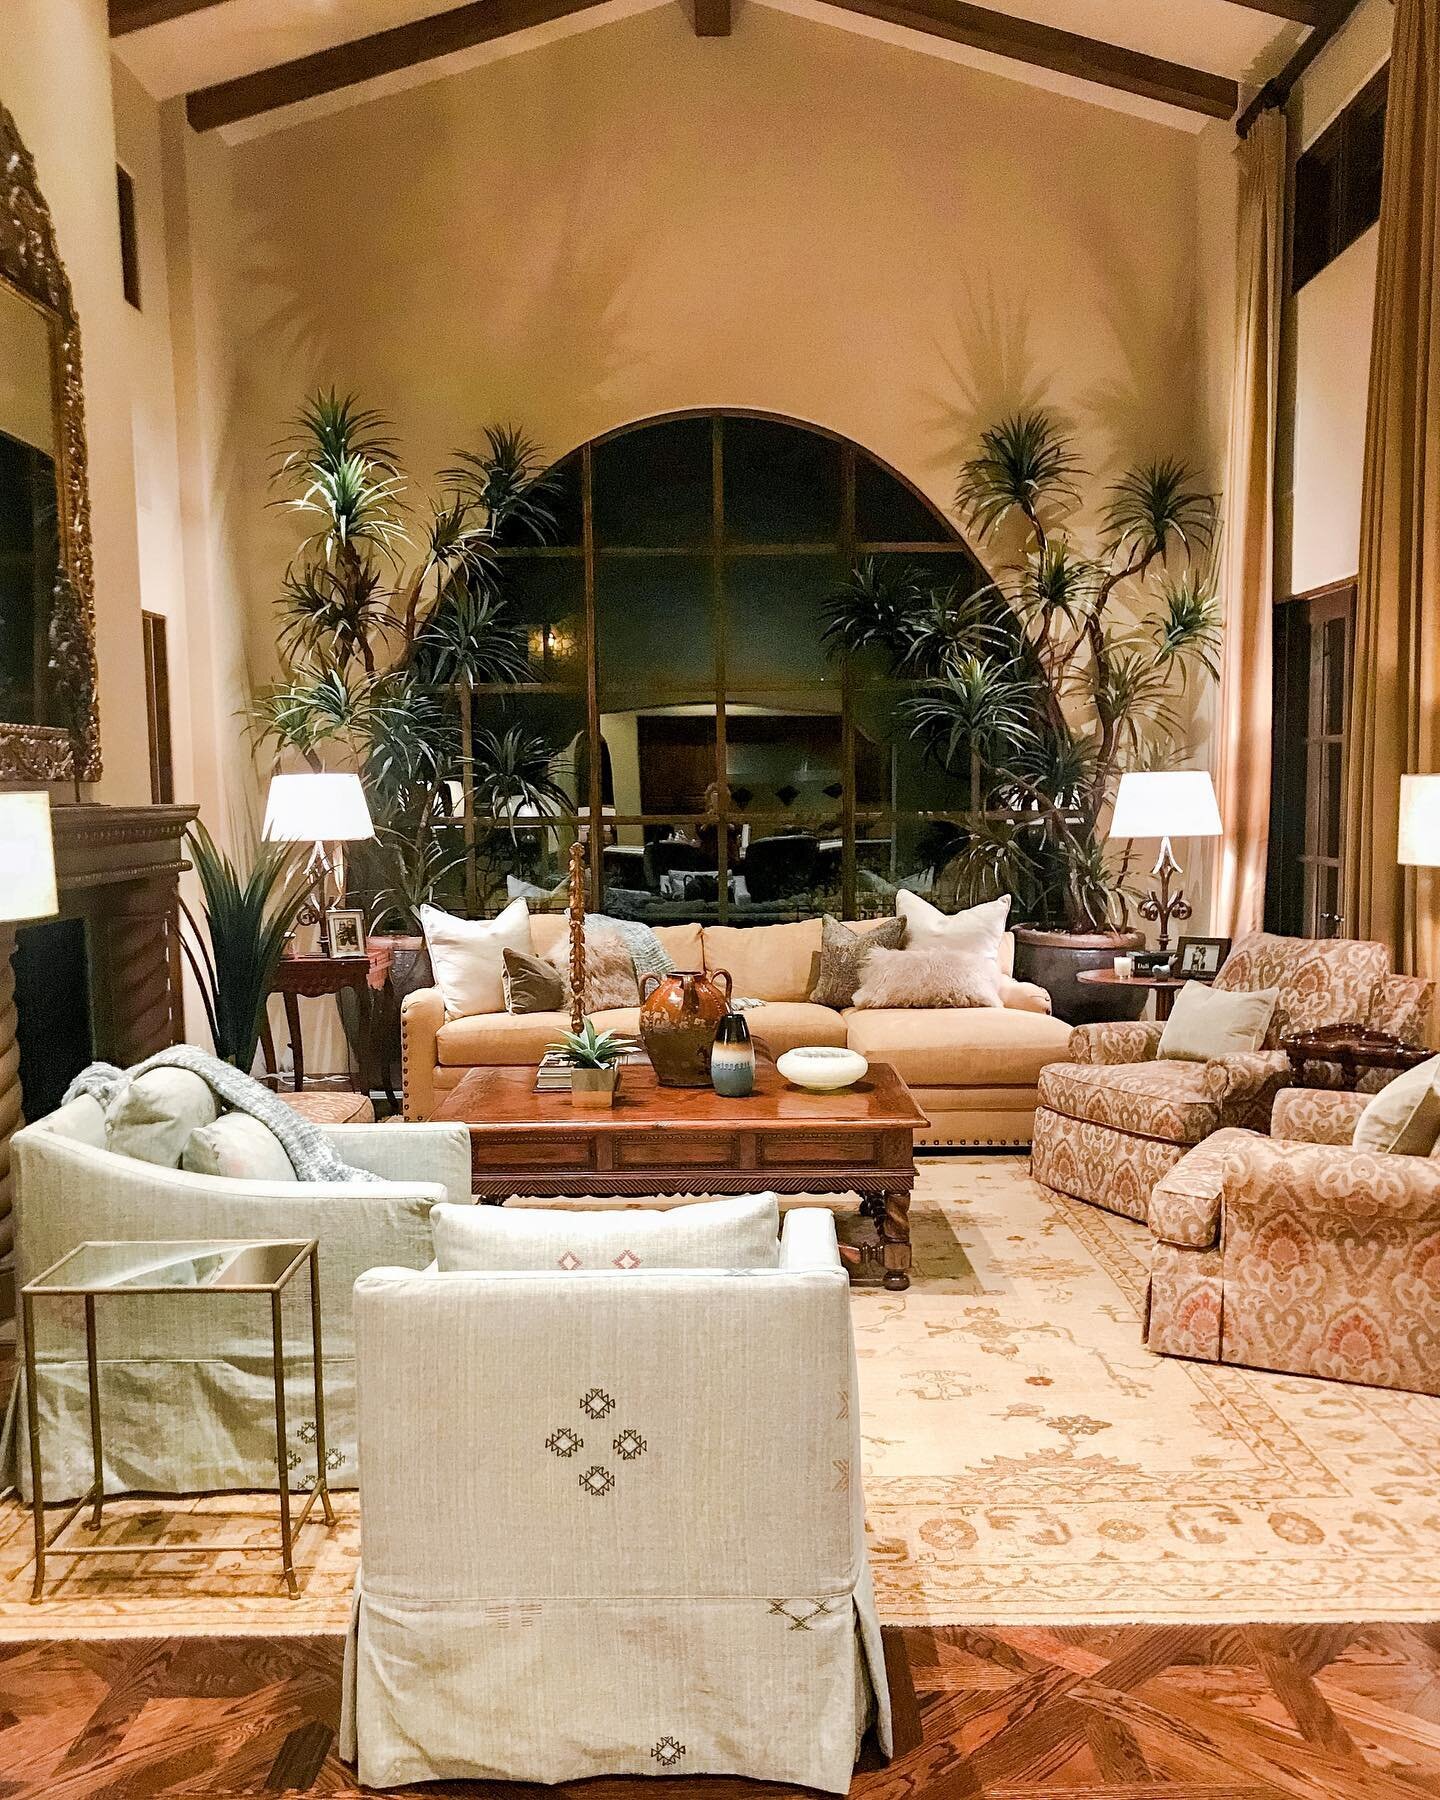 Rustic traditional living room. #camillacavandesign